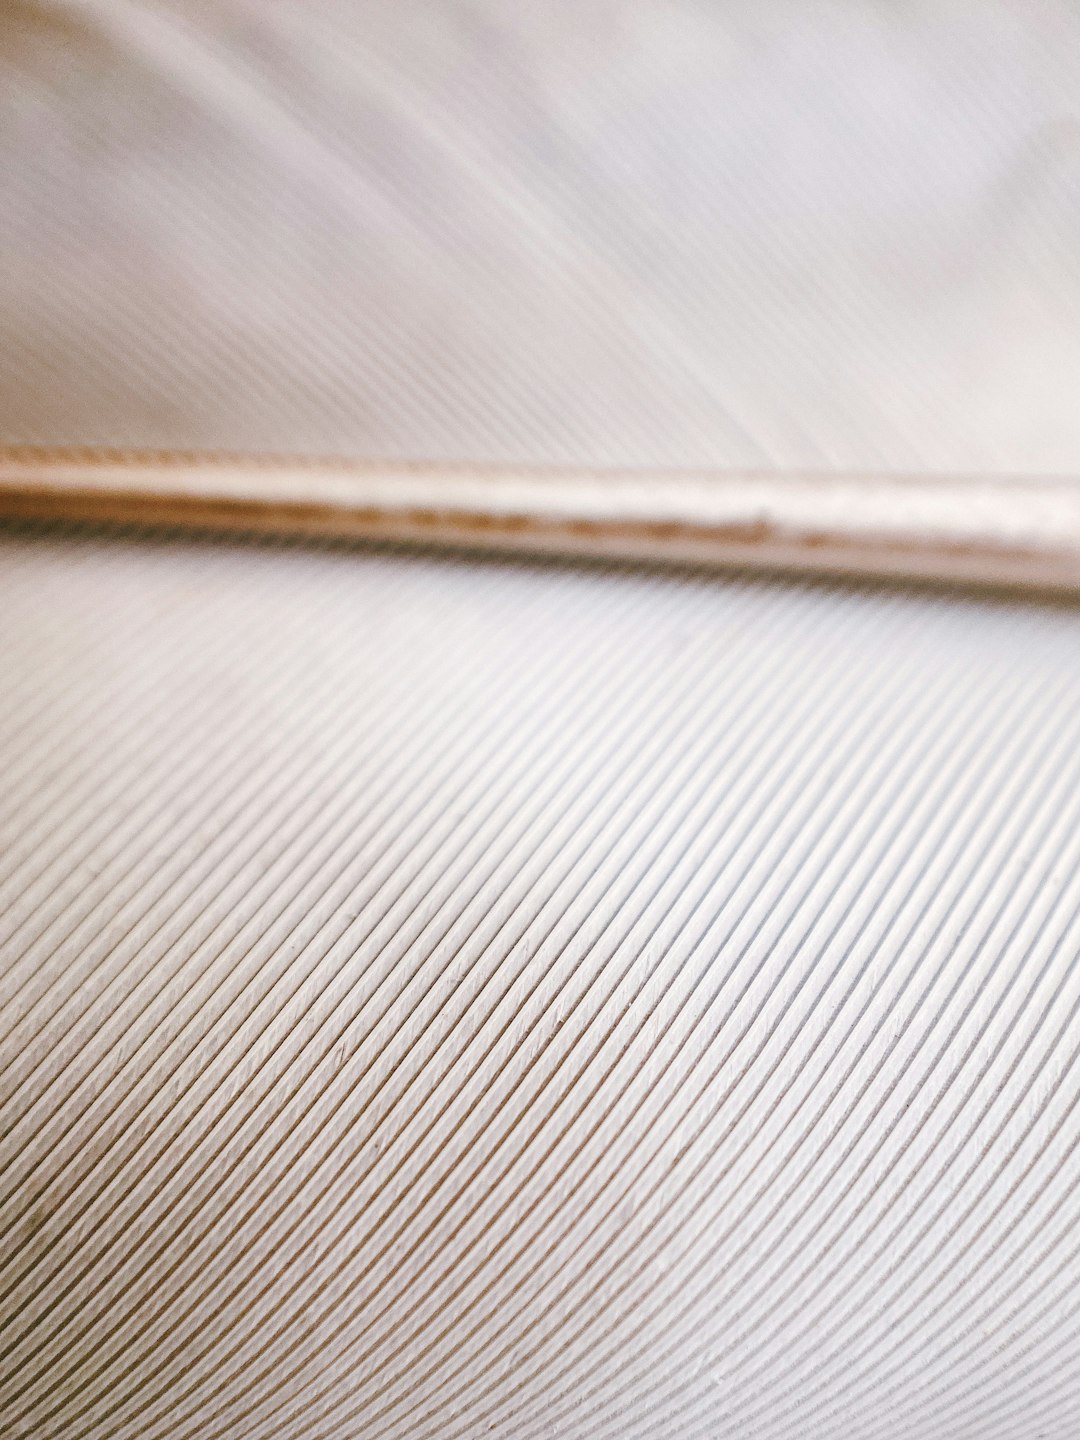 brown leather strap on white textile